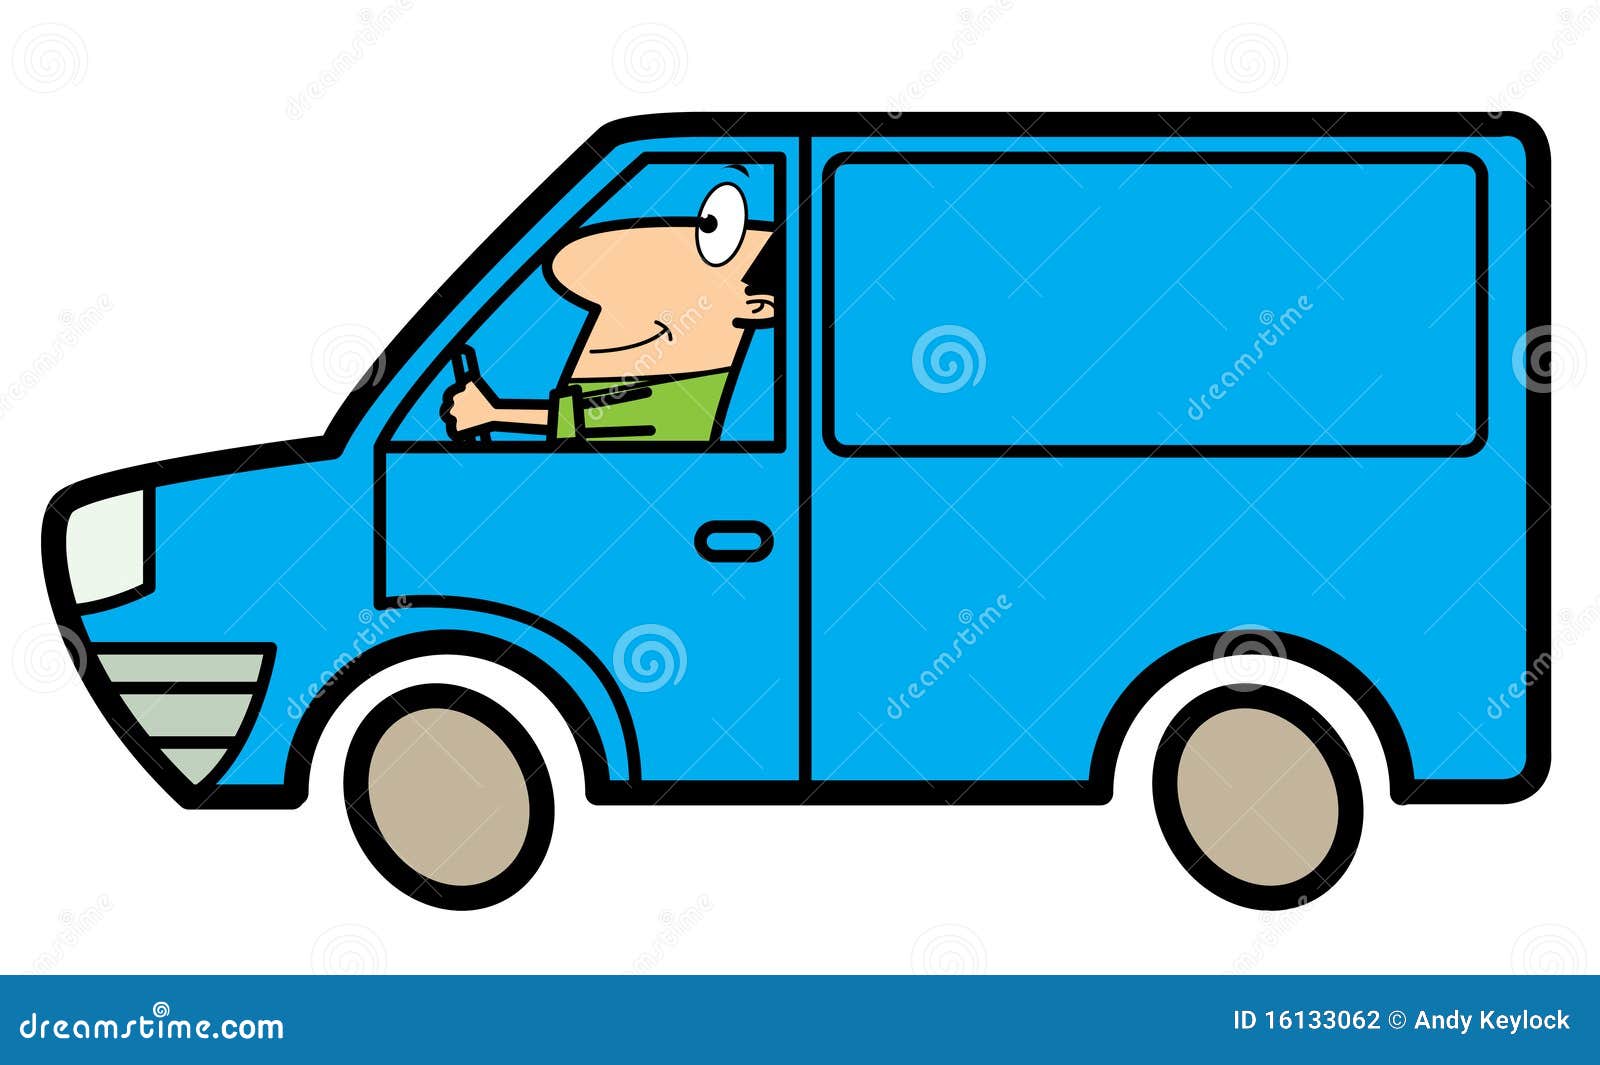 Cartoon Man Driving A Truck Stock Vector  Illustration of work, working: 16133062